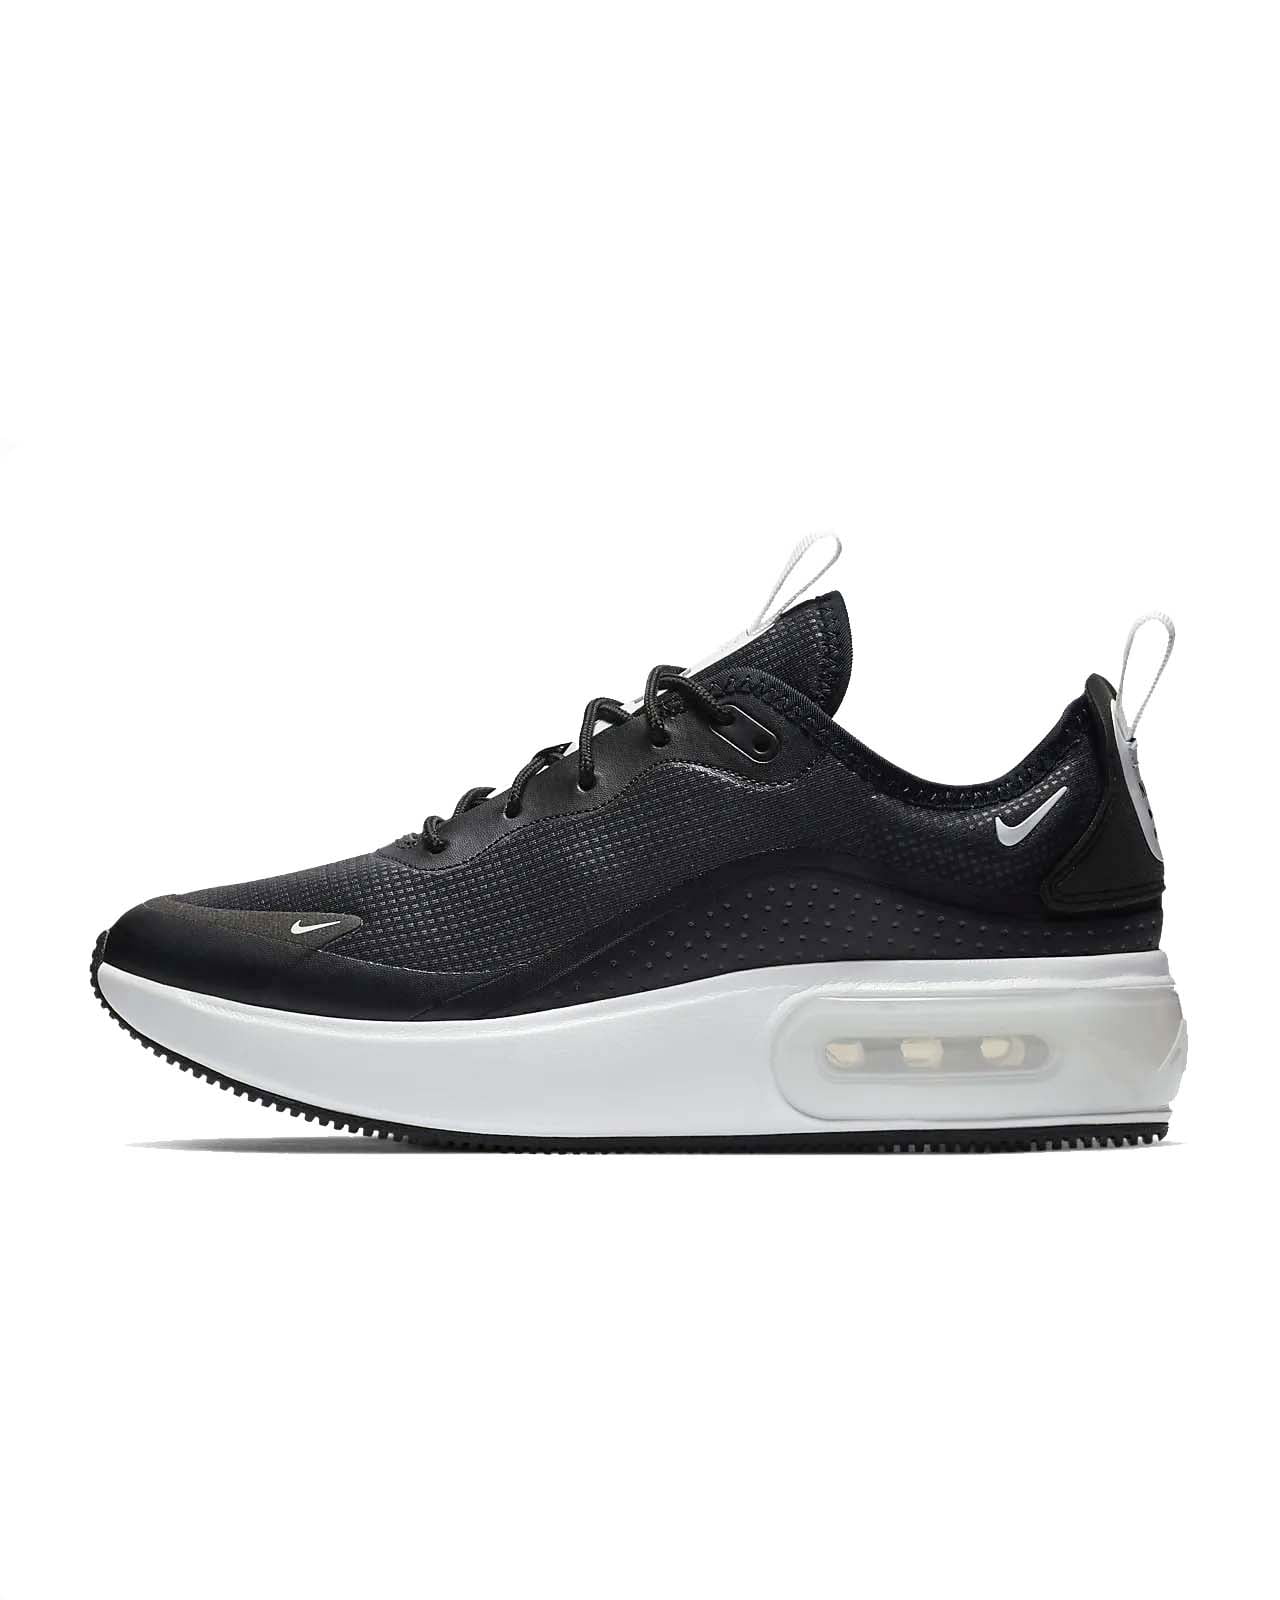 Ausencia la carretera testigo Nike Women's Air Max Dia Running Shoes (Black/Summit White, 8) - Walmart.com